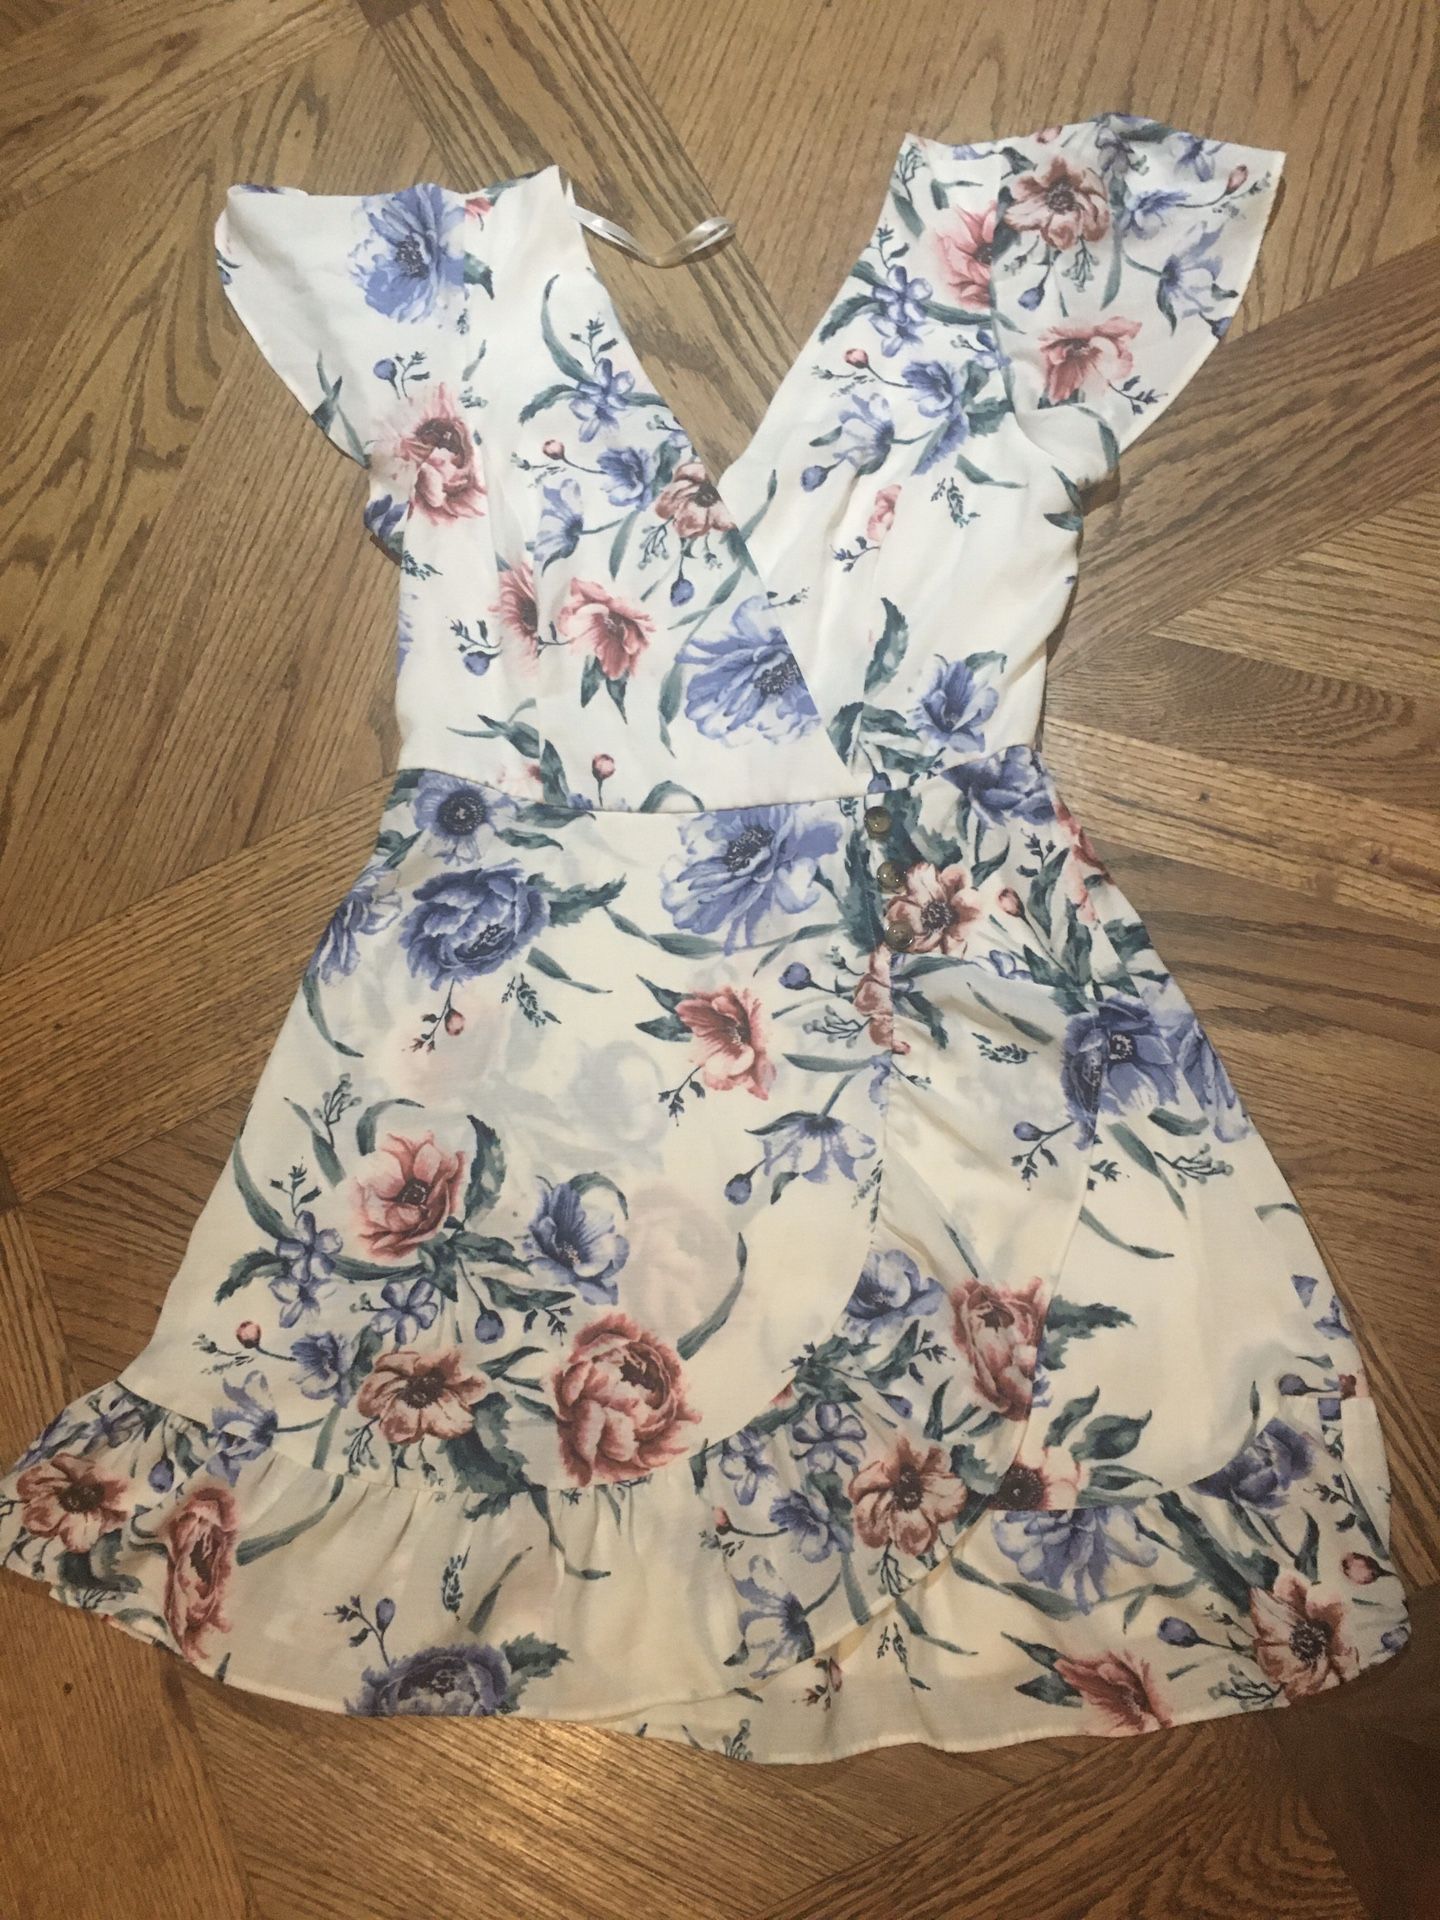 New Dress Size 5 Juniors $13